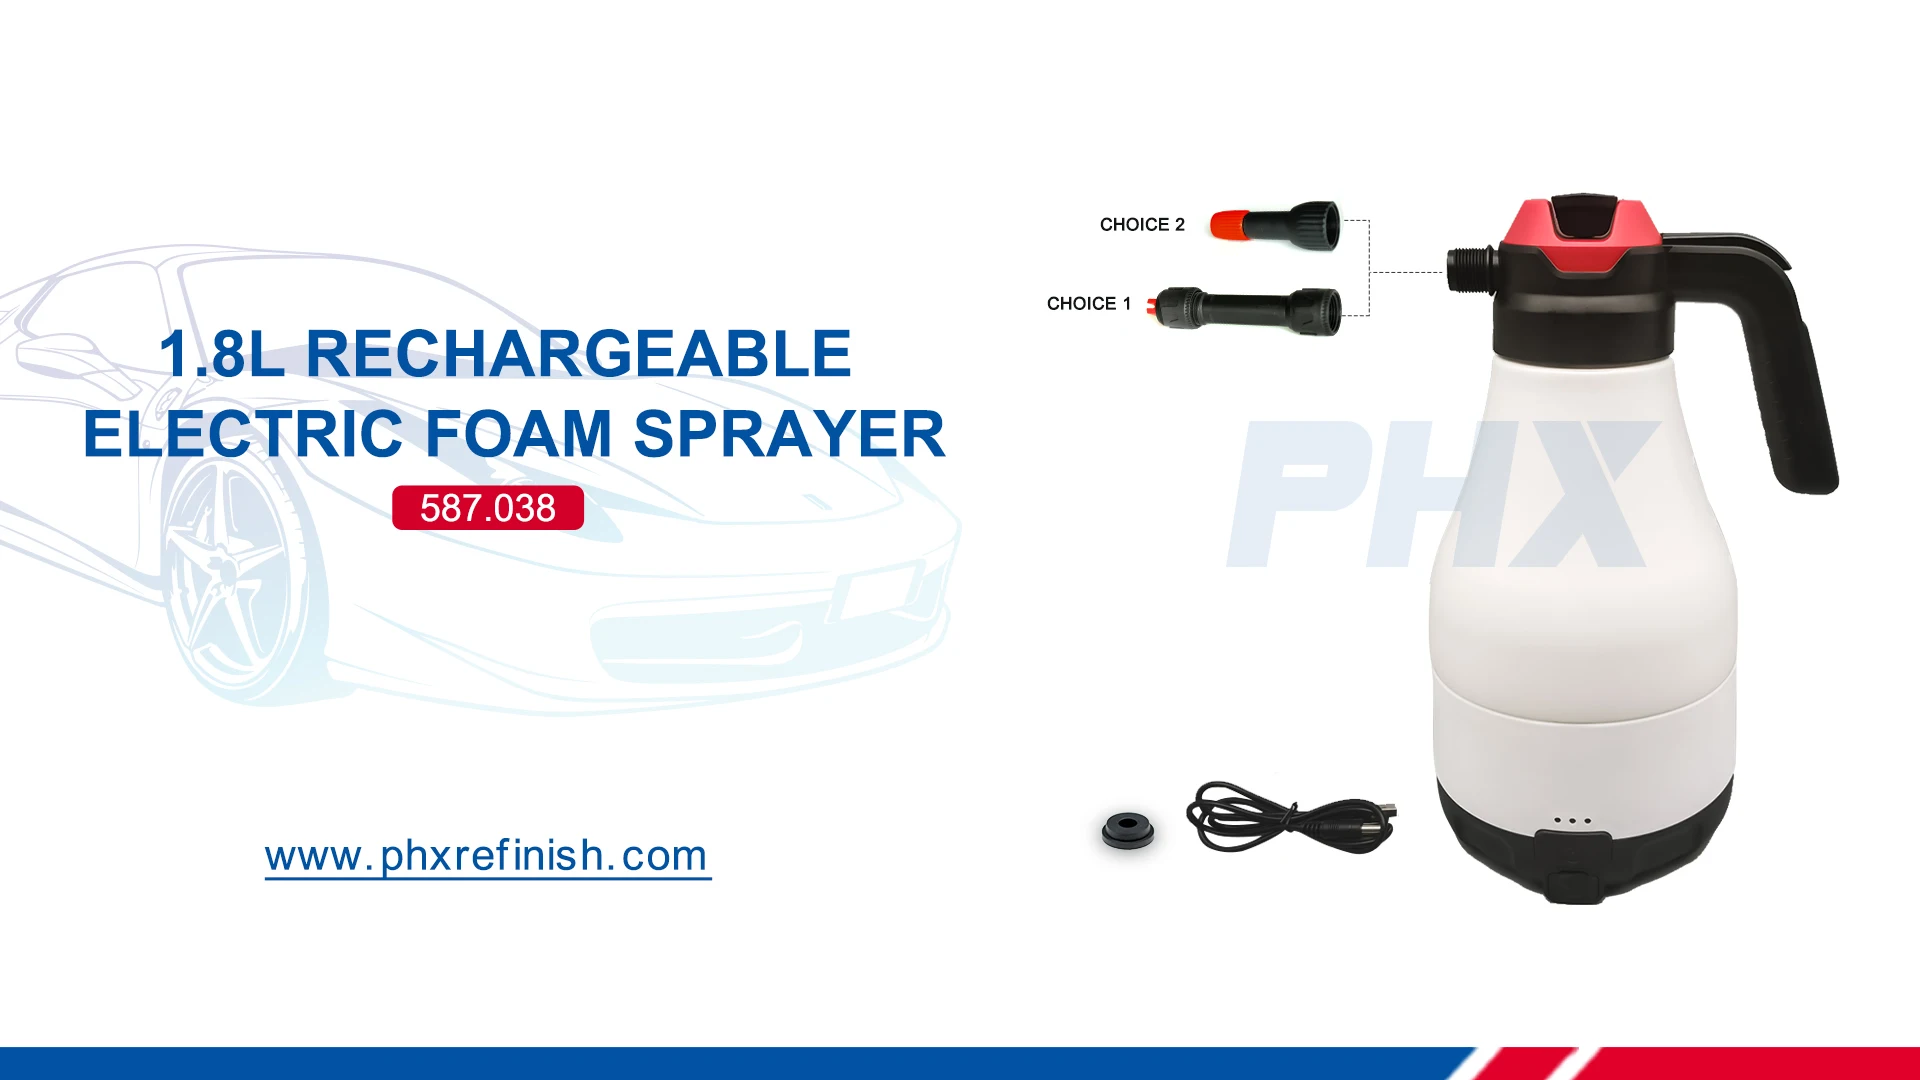 1.8L rechargeable battery foam sprayer - Manufacturer